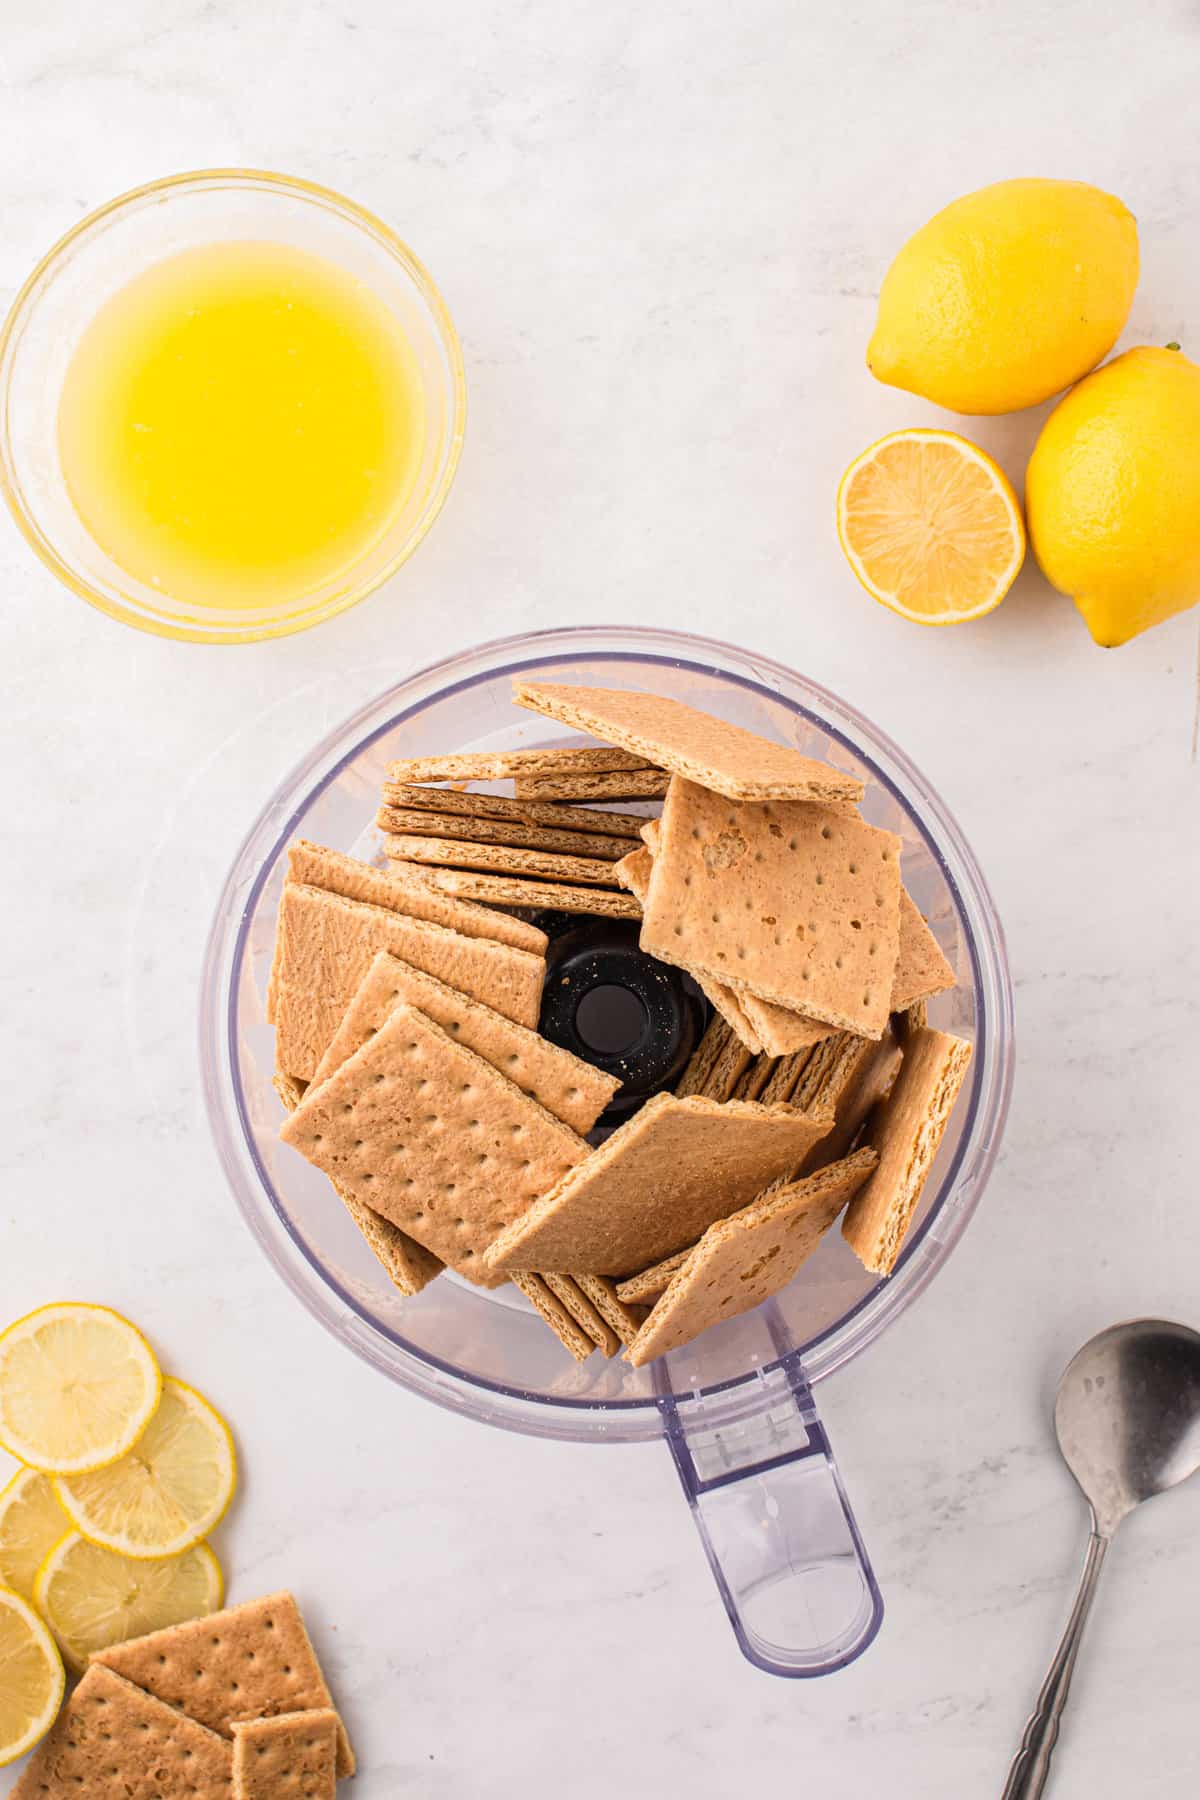 Graham cracker sheets in food processor for Lemon Cheesecake recipe